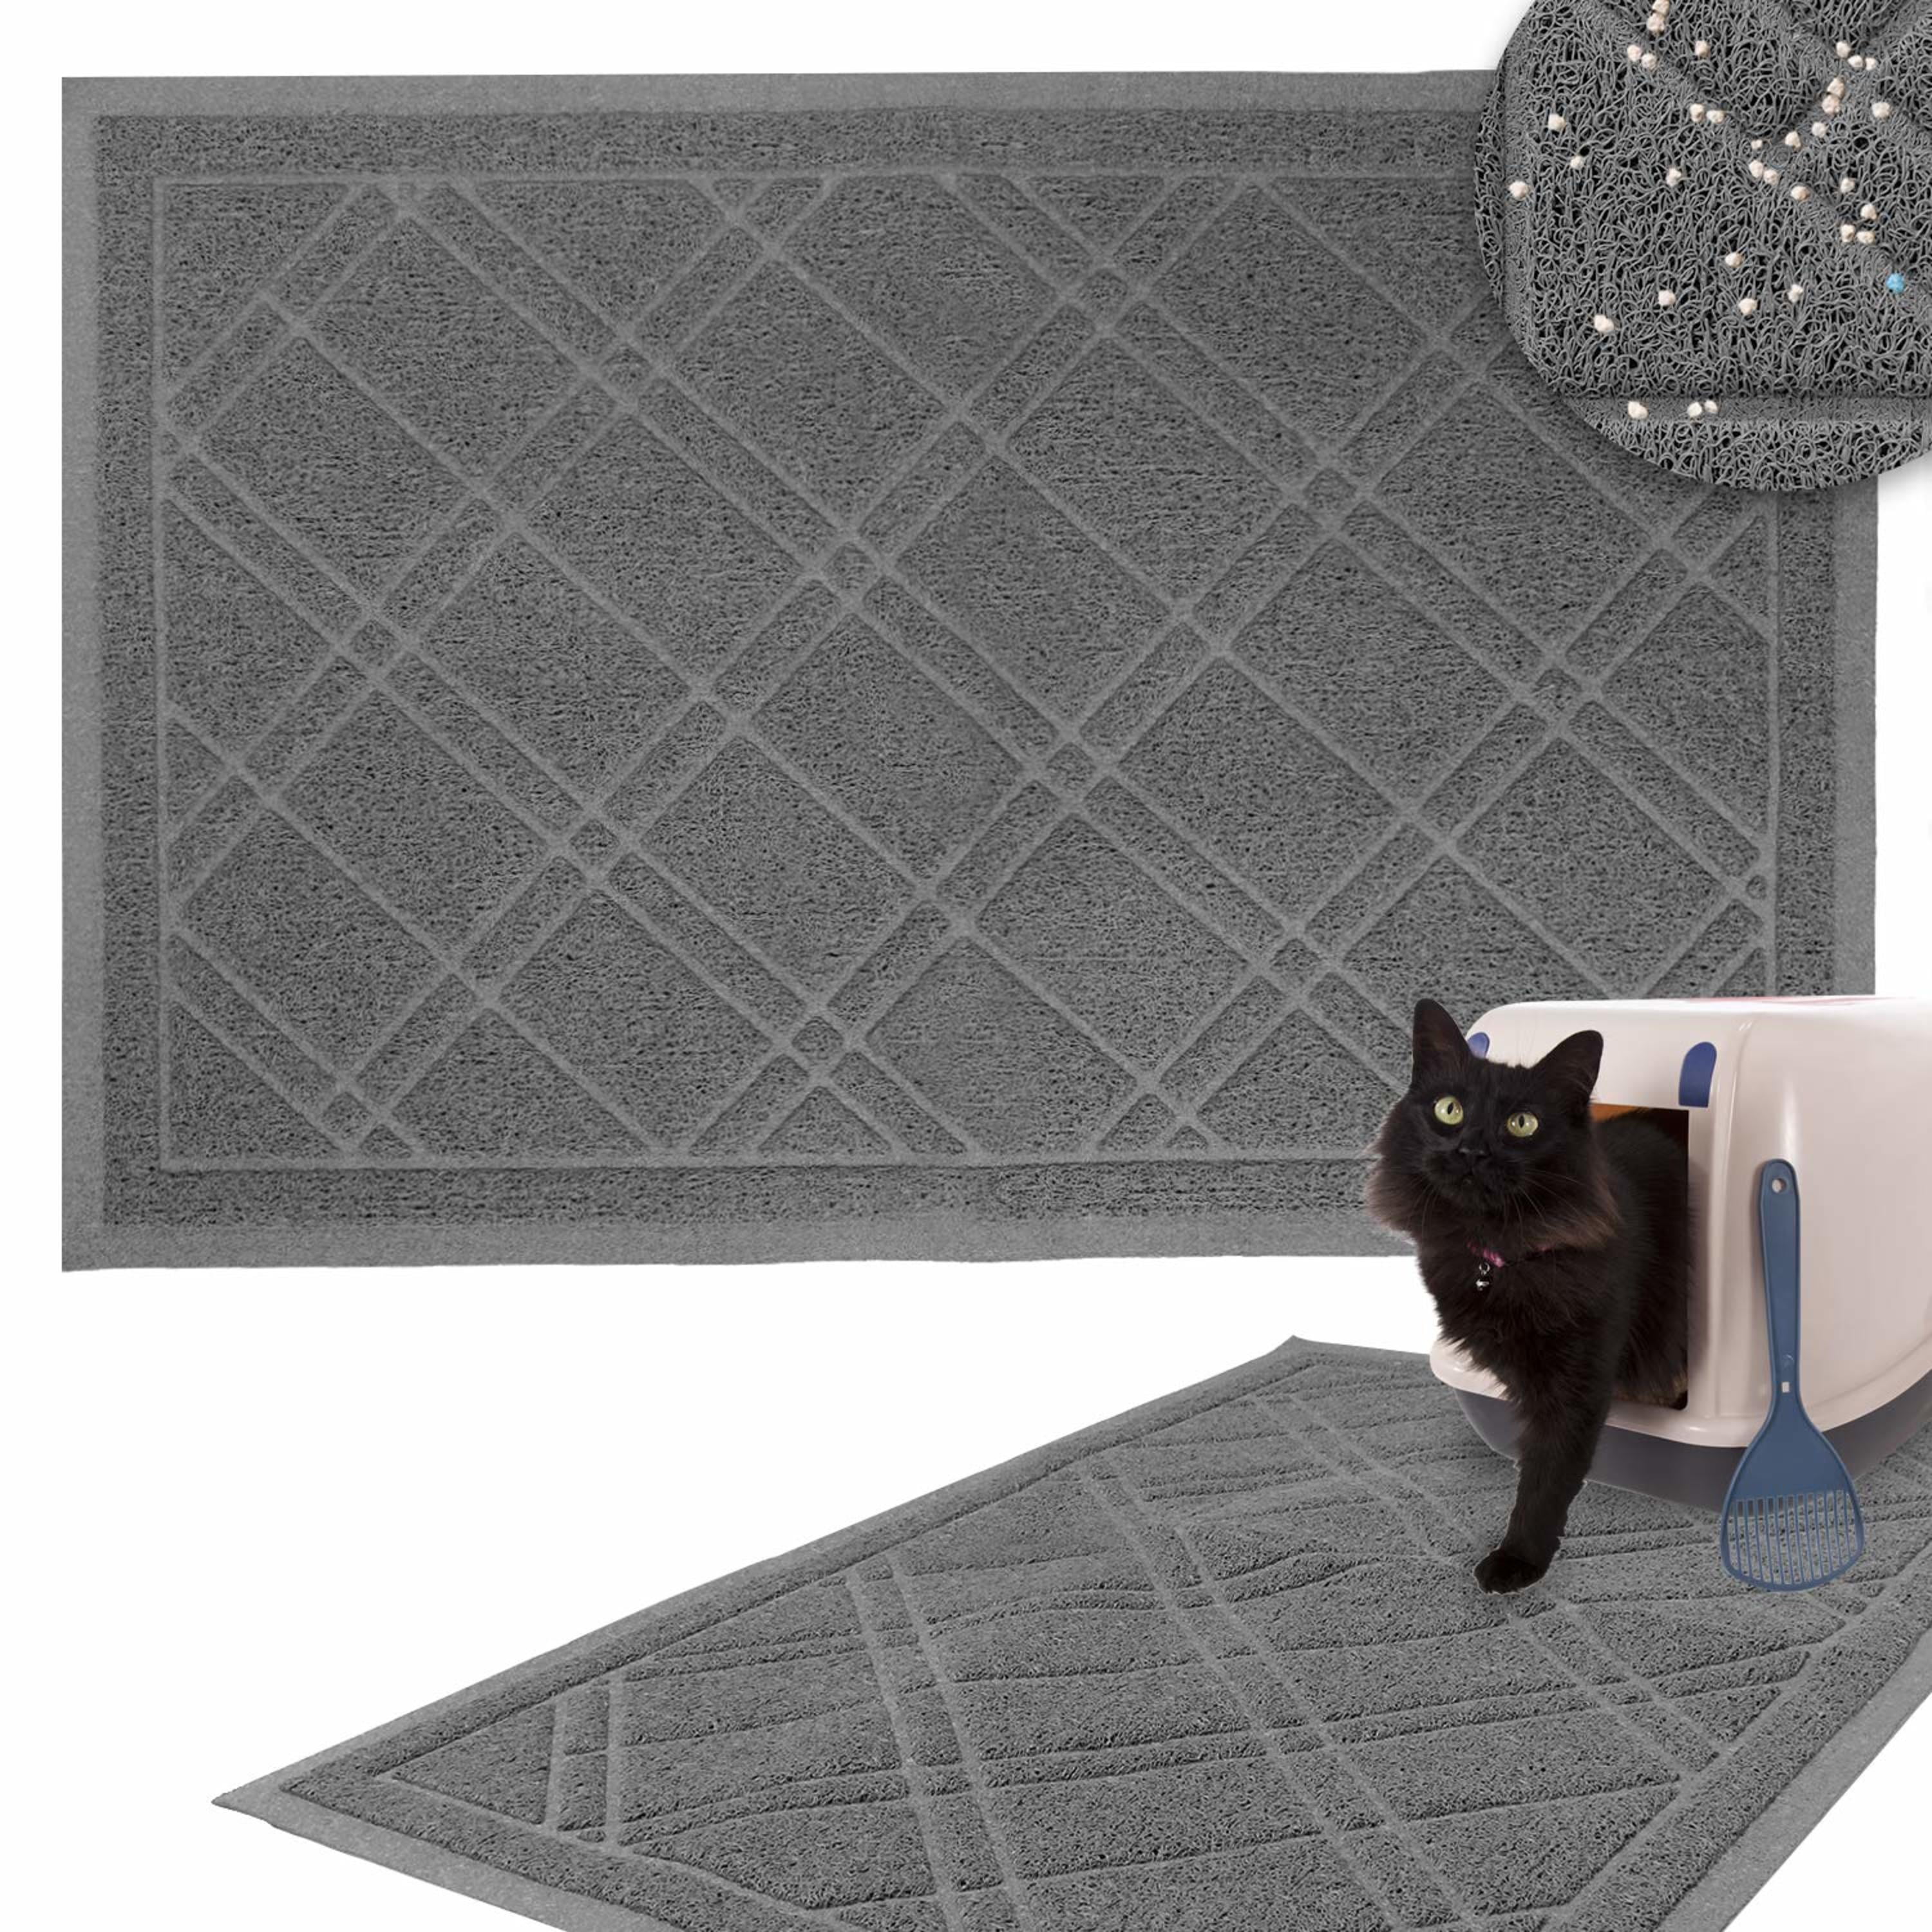 UPSKY Cat Litter Mat, Large Kitty Litter Trapping Mat Soft on